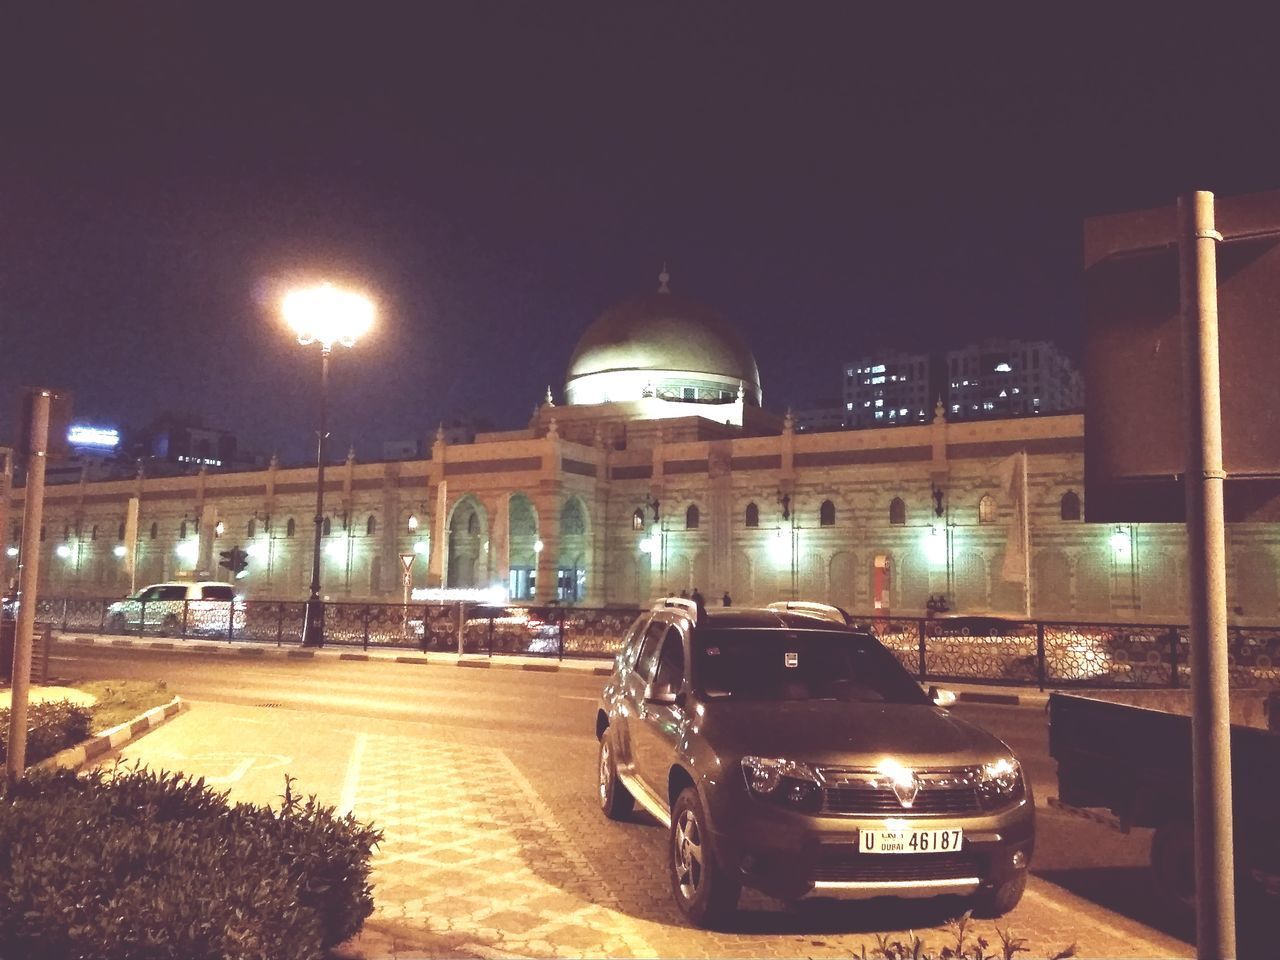 CARS ON ILLUMINATED CITY AT NIGHT